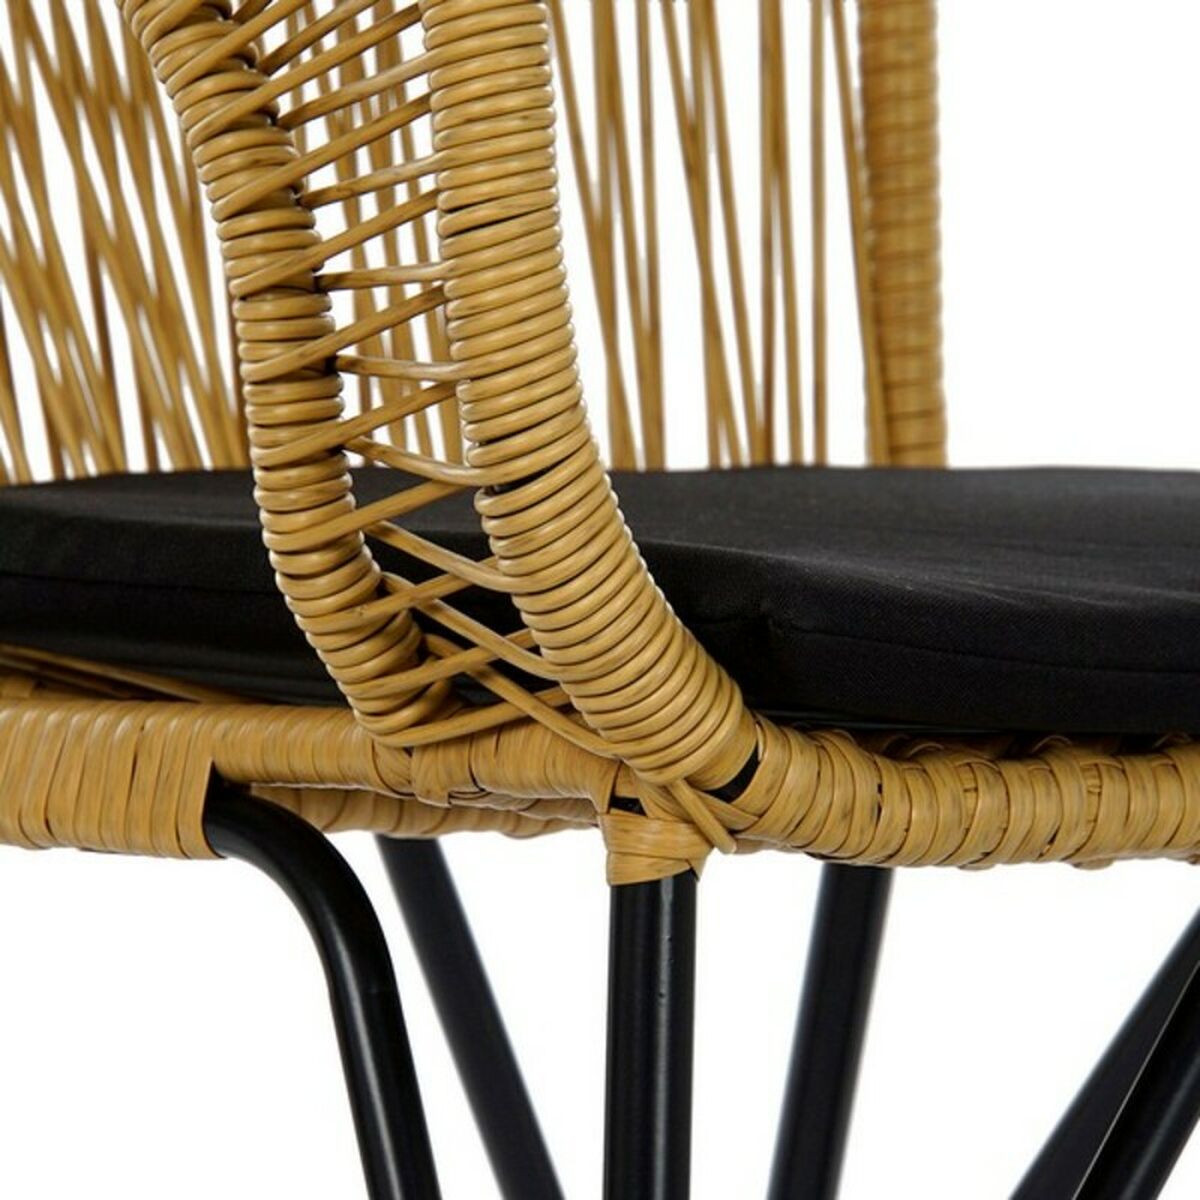 Garden chair DKD Home Decor MB-178988 51 x 61 x 81 cm Natural Black